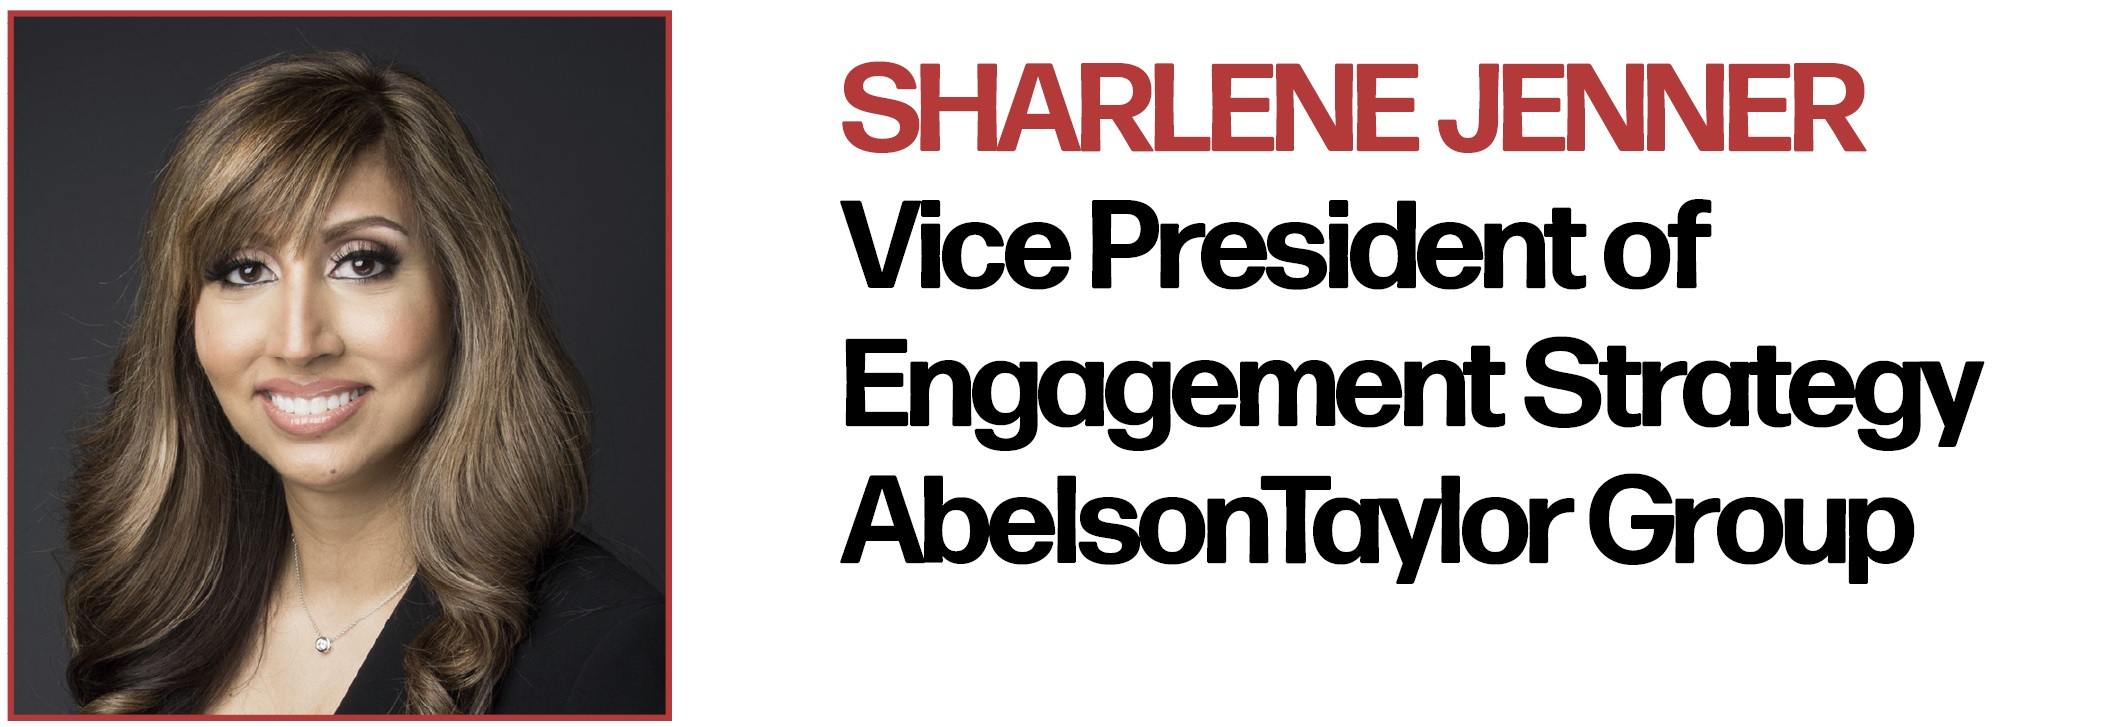 Sharlene Jenner Vice President of Engagement Strategy AbelsonTaylor Group